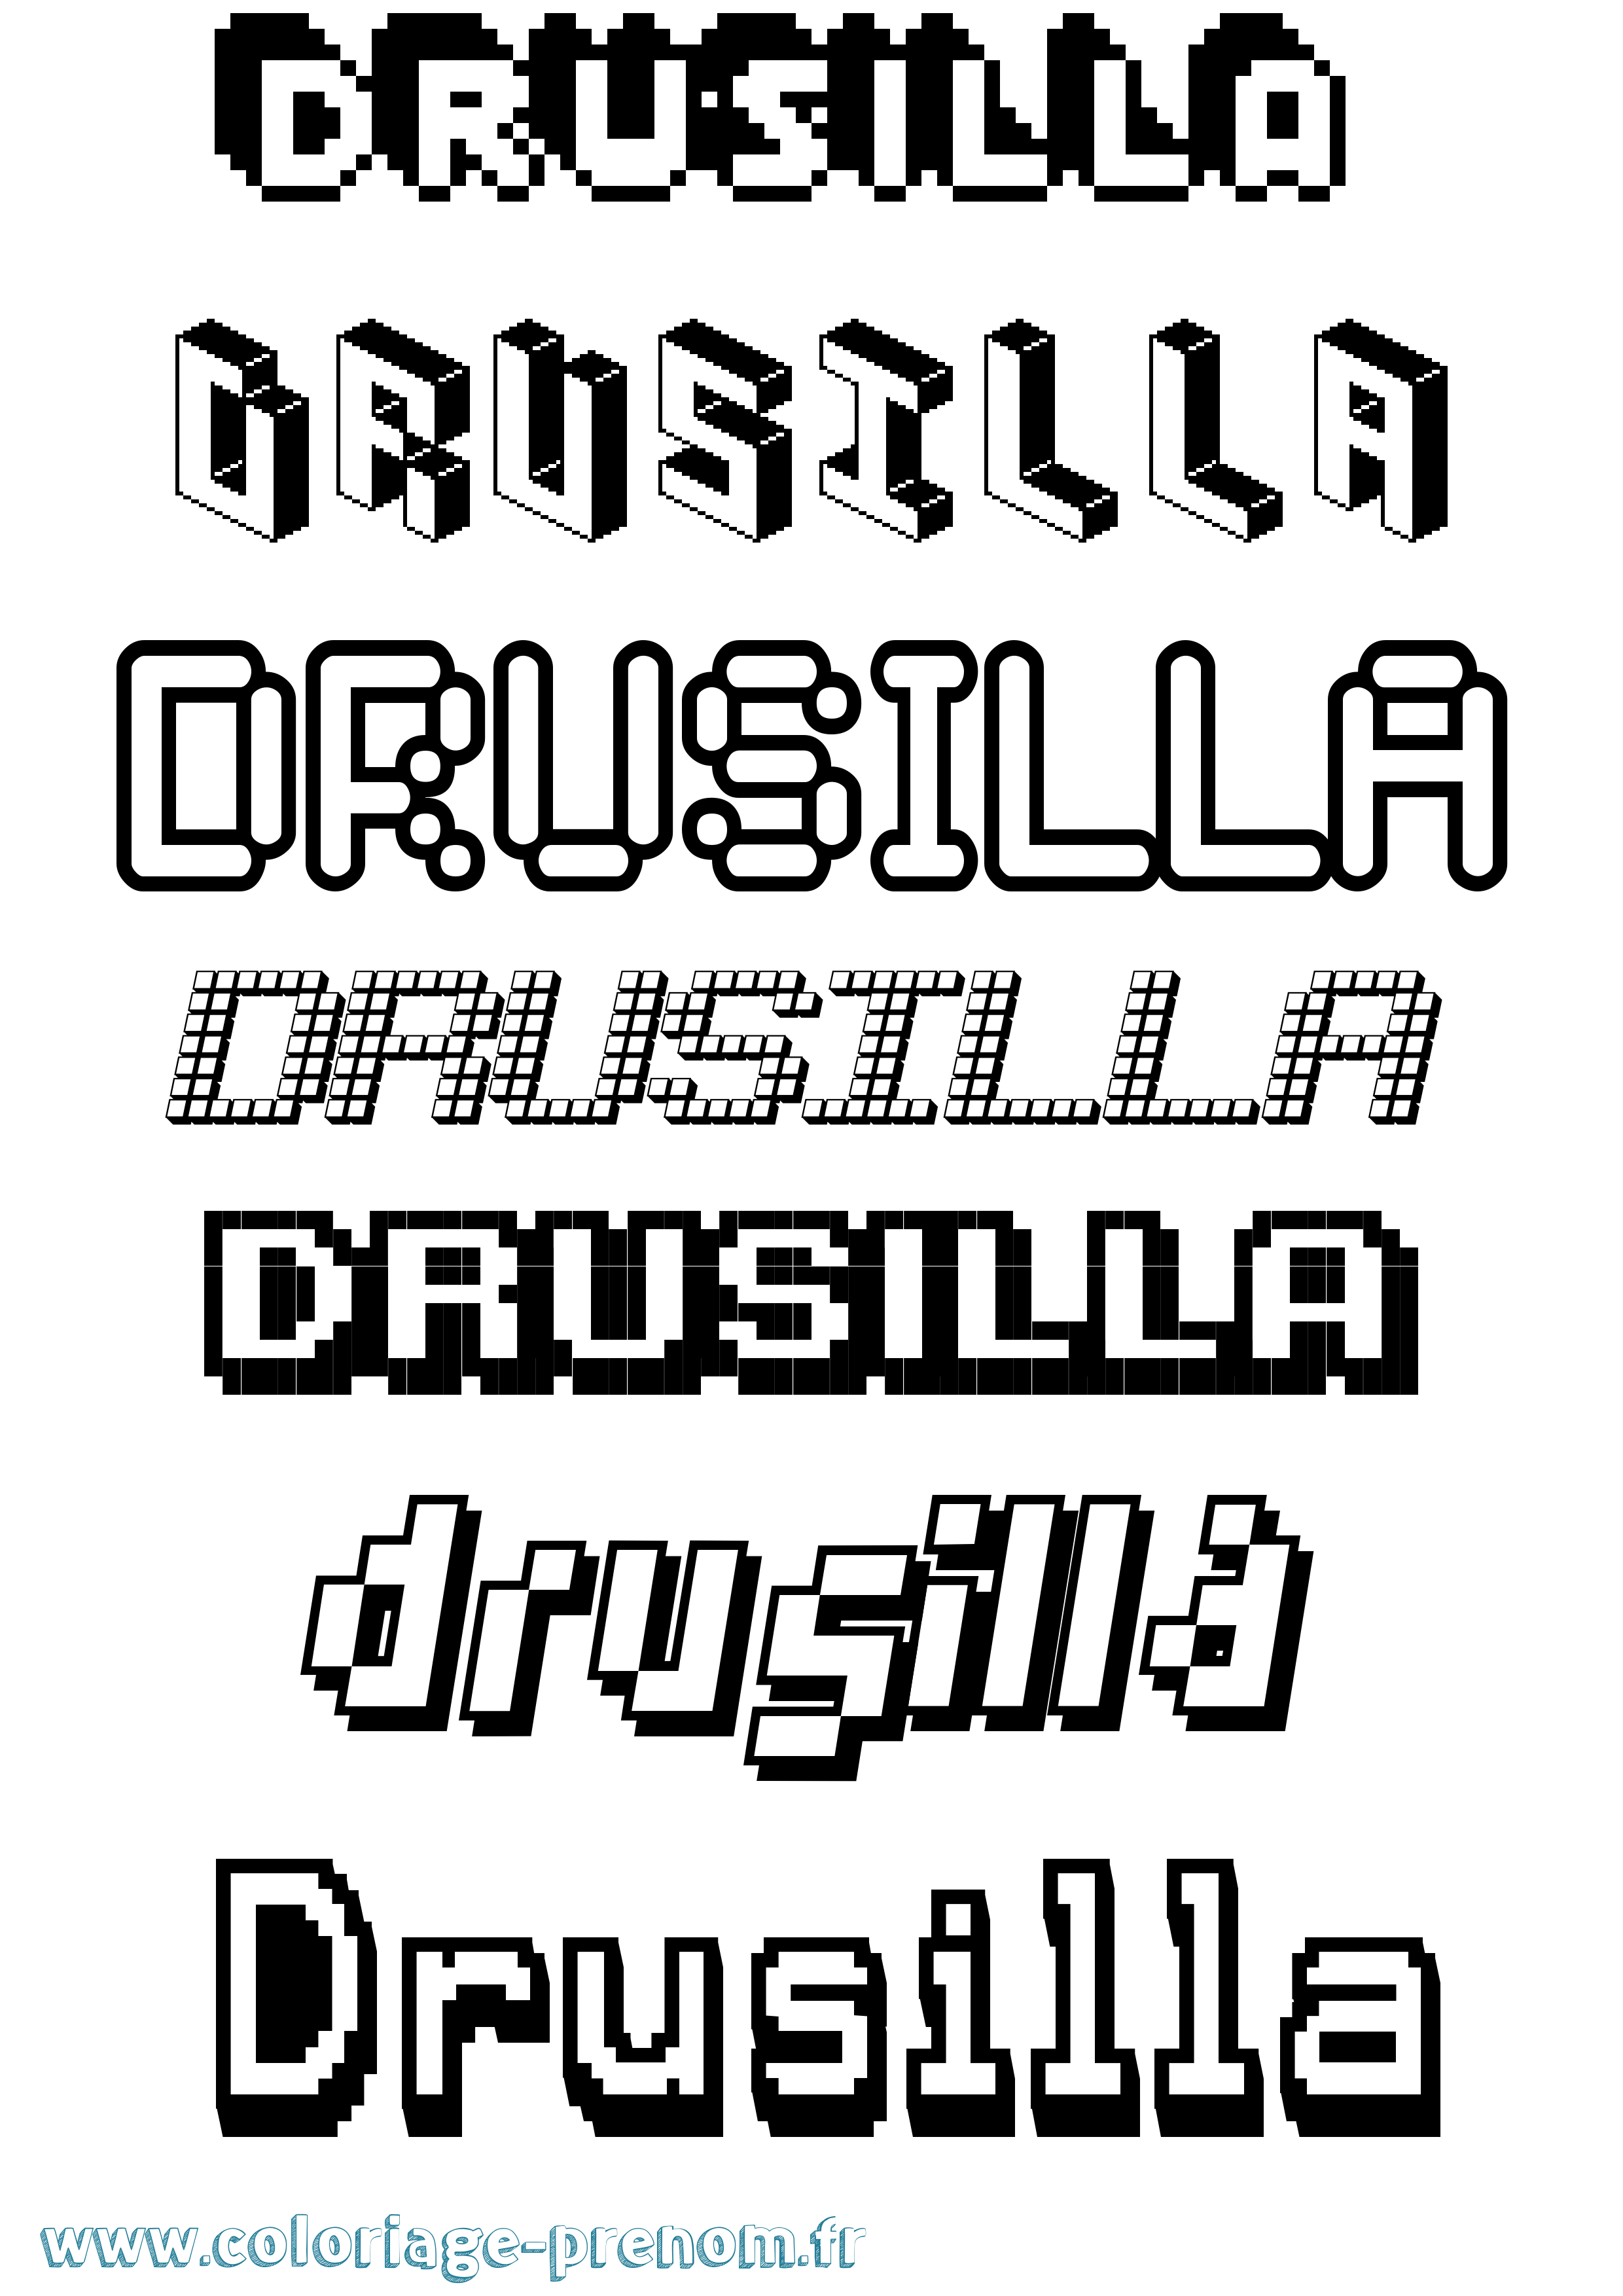 Coloriage prénom Drusilla Pixel